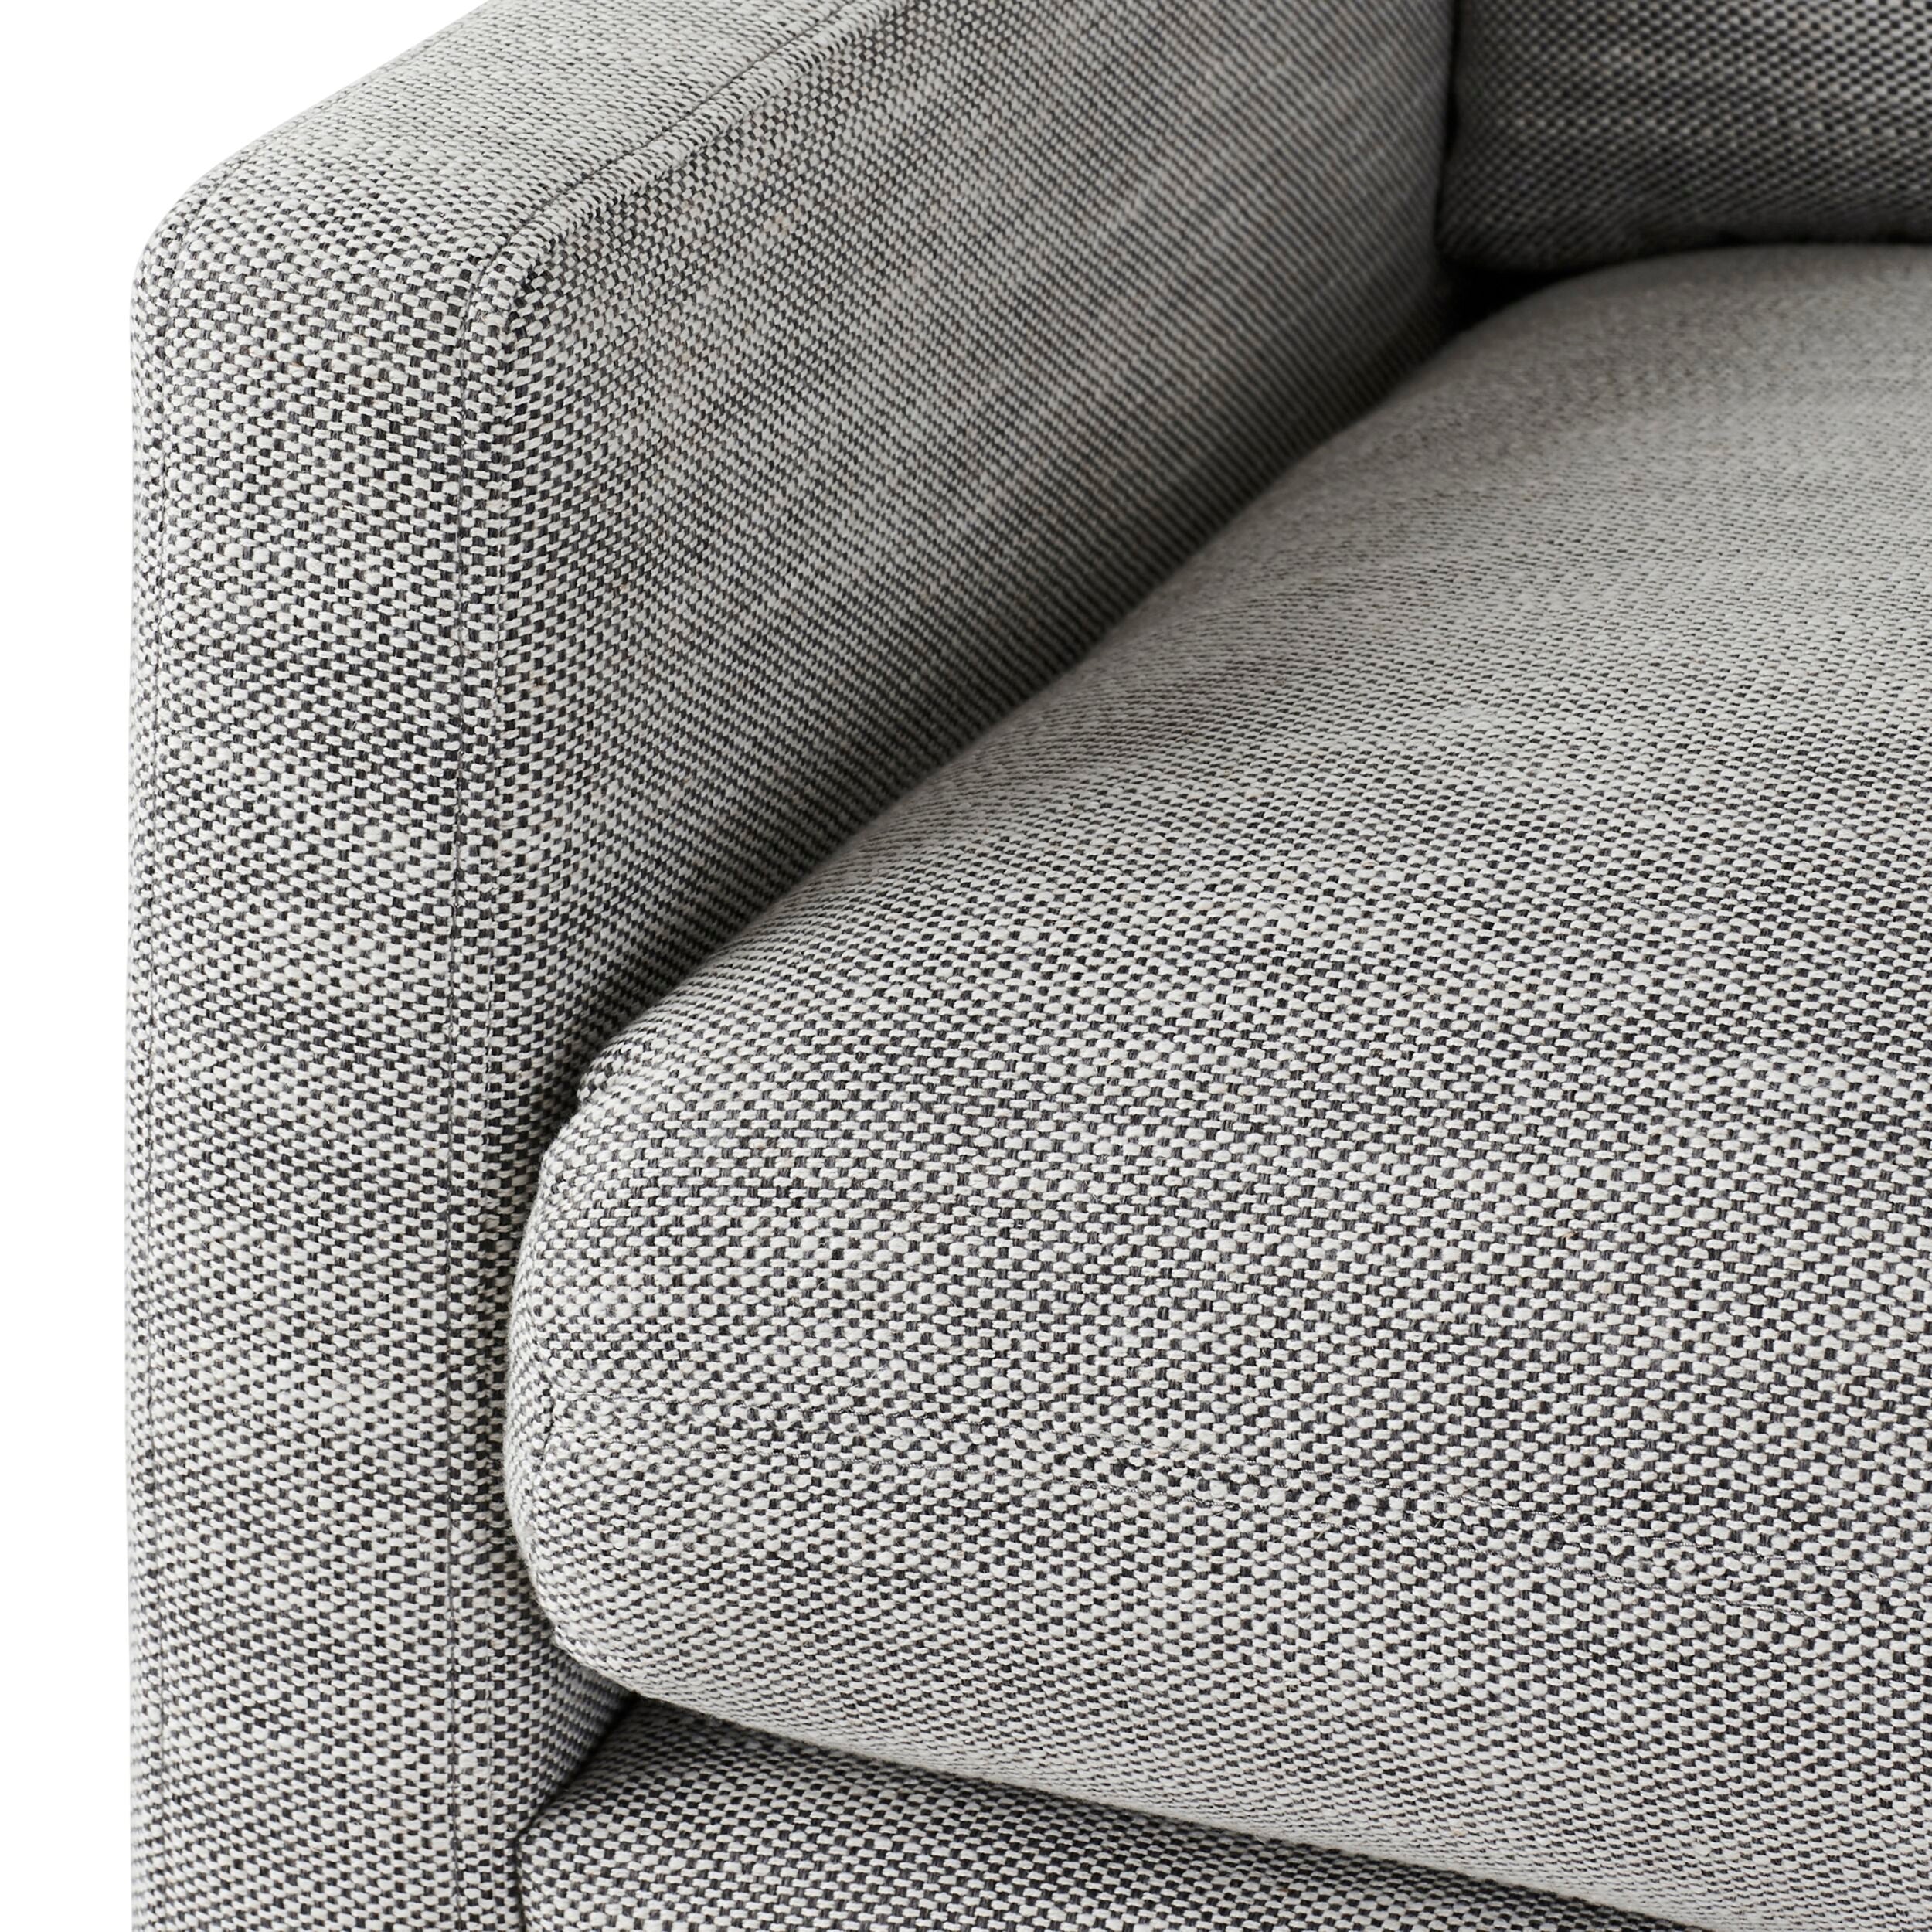 Easton 3 Seater Fabric Sofa Grey Flint